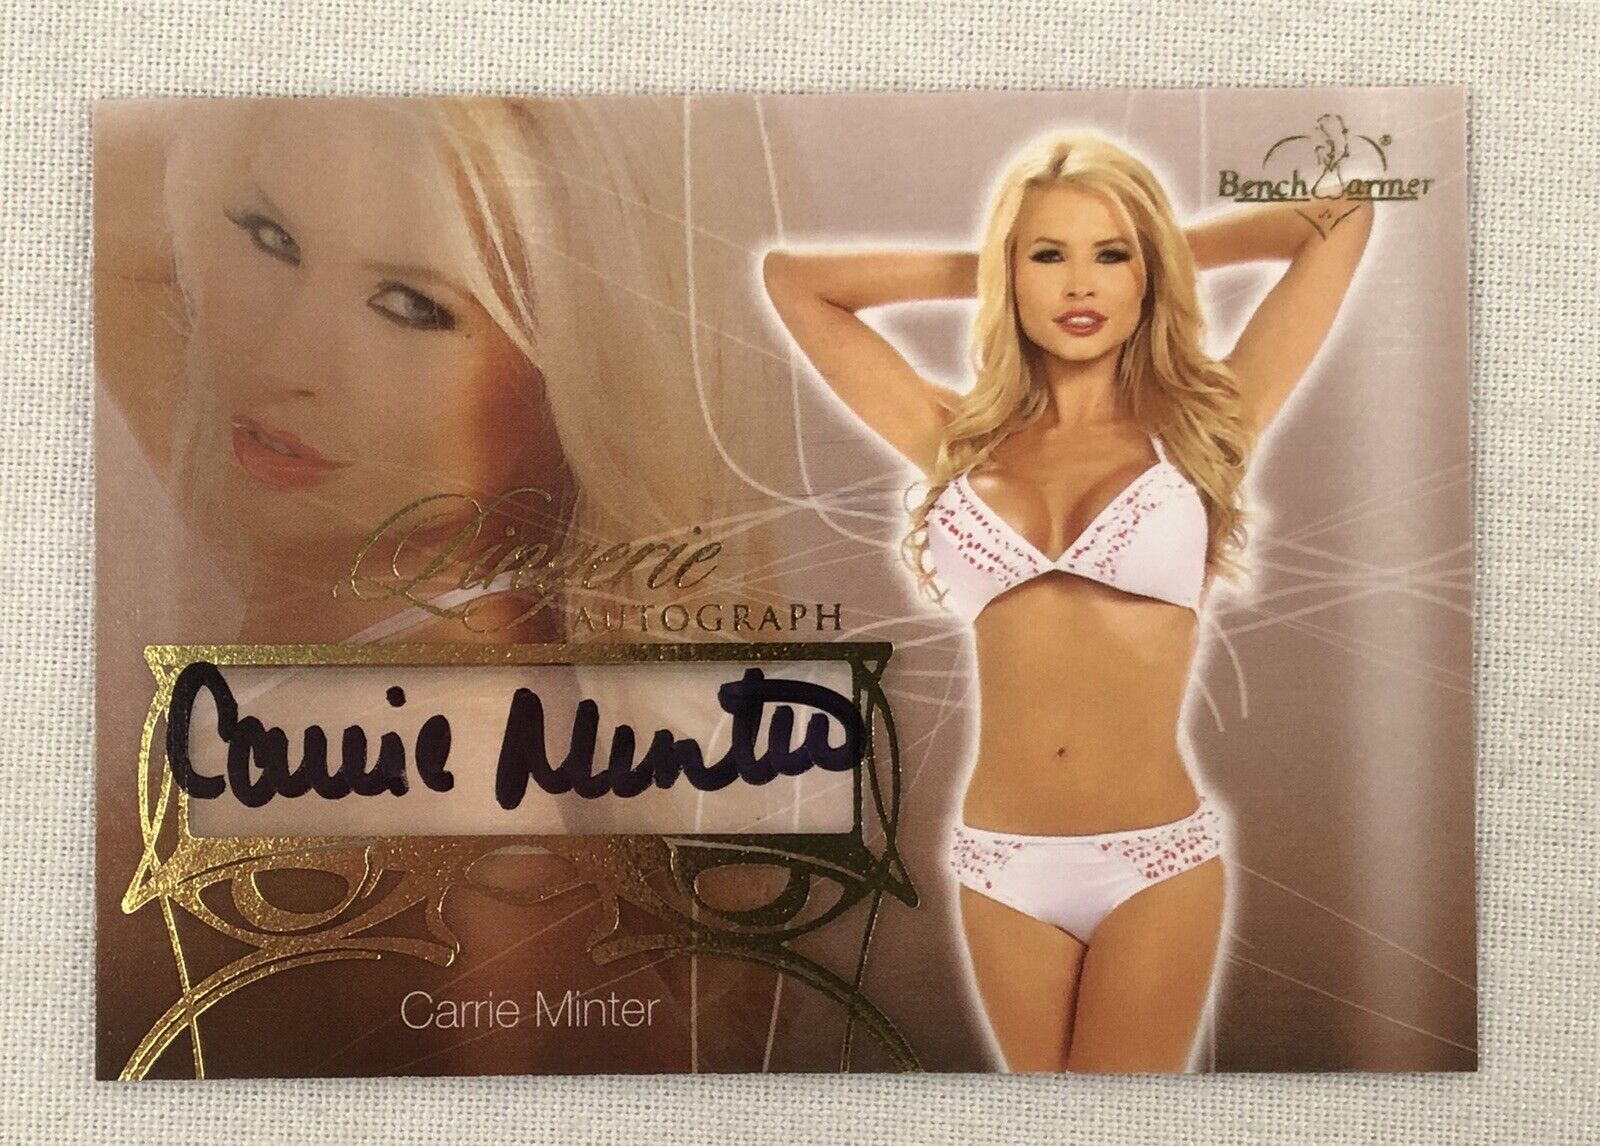 2013 Benchwarmer Hobby Carrie Minter Autograph Lingerie Card #33 Bench Warmer